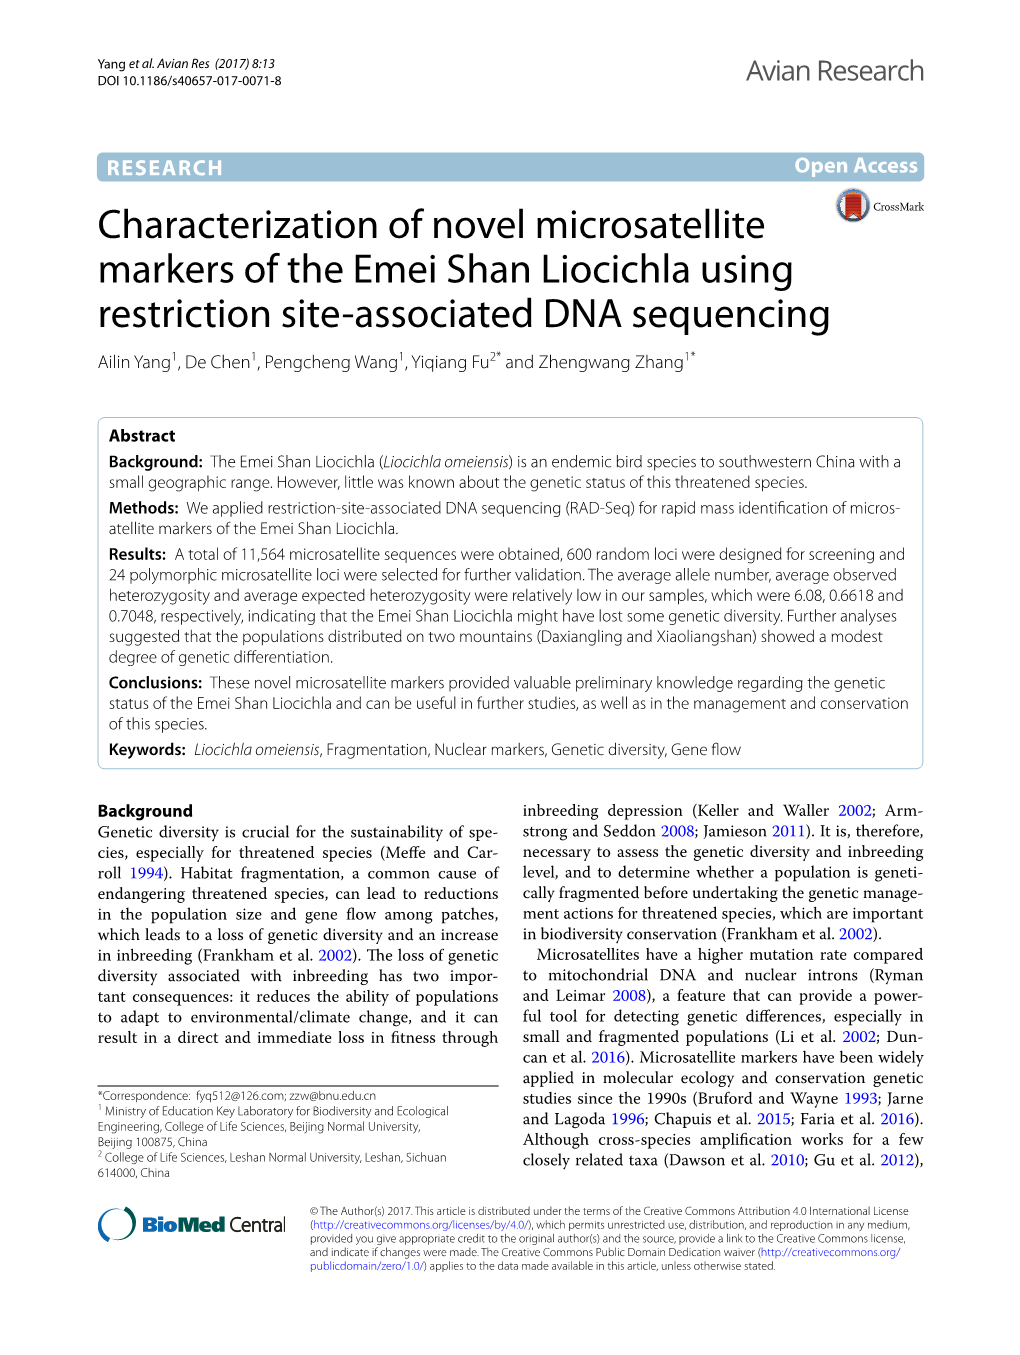 Characterization of Novel Microsatellite Markers of the Emei